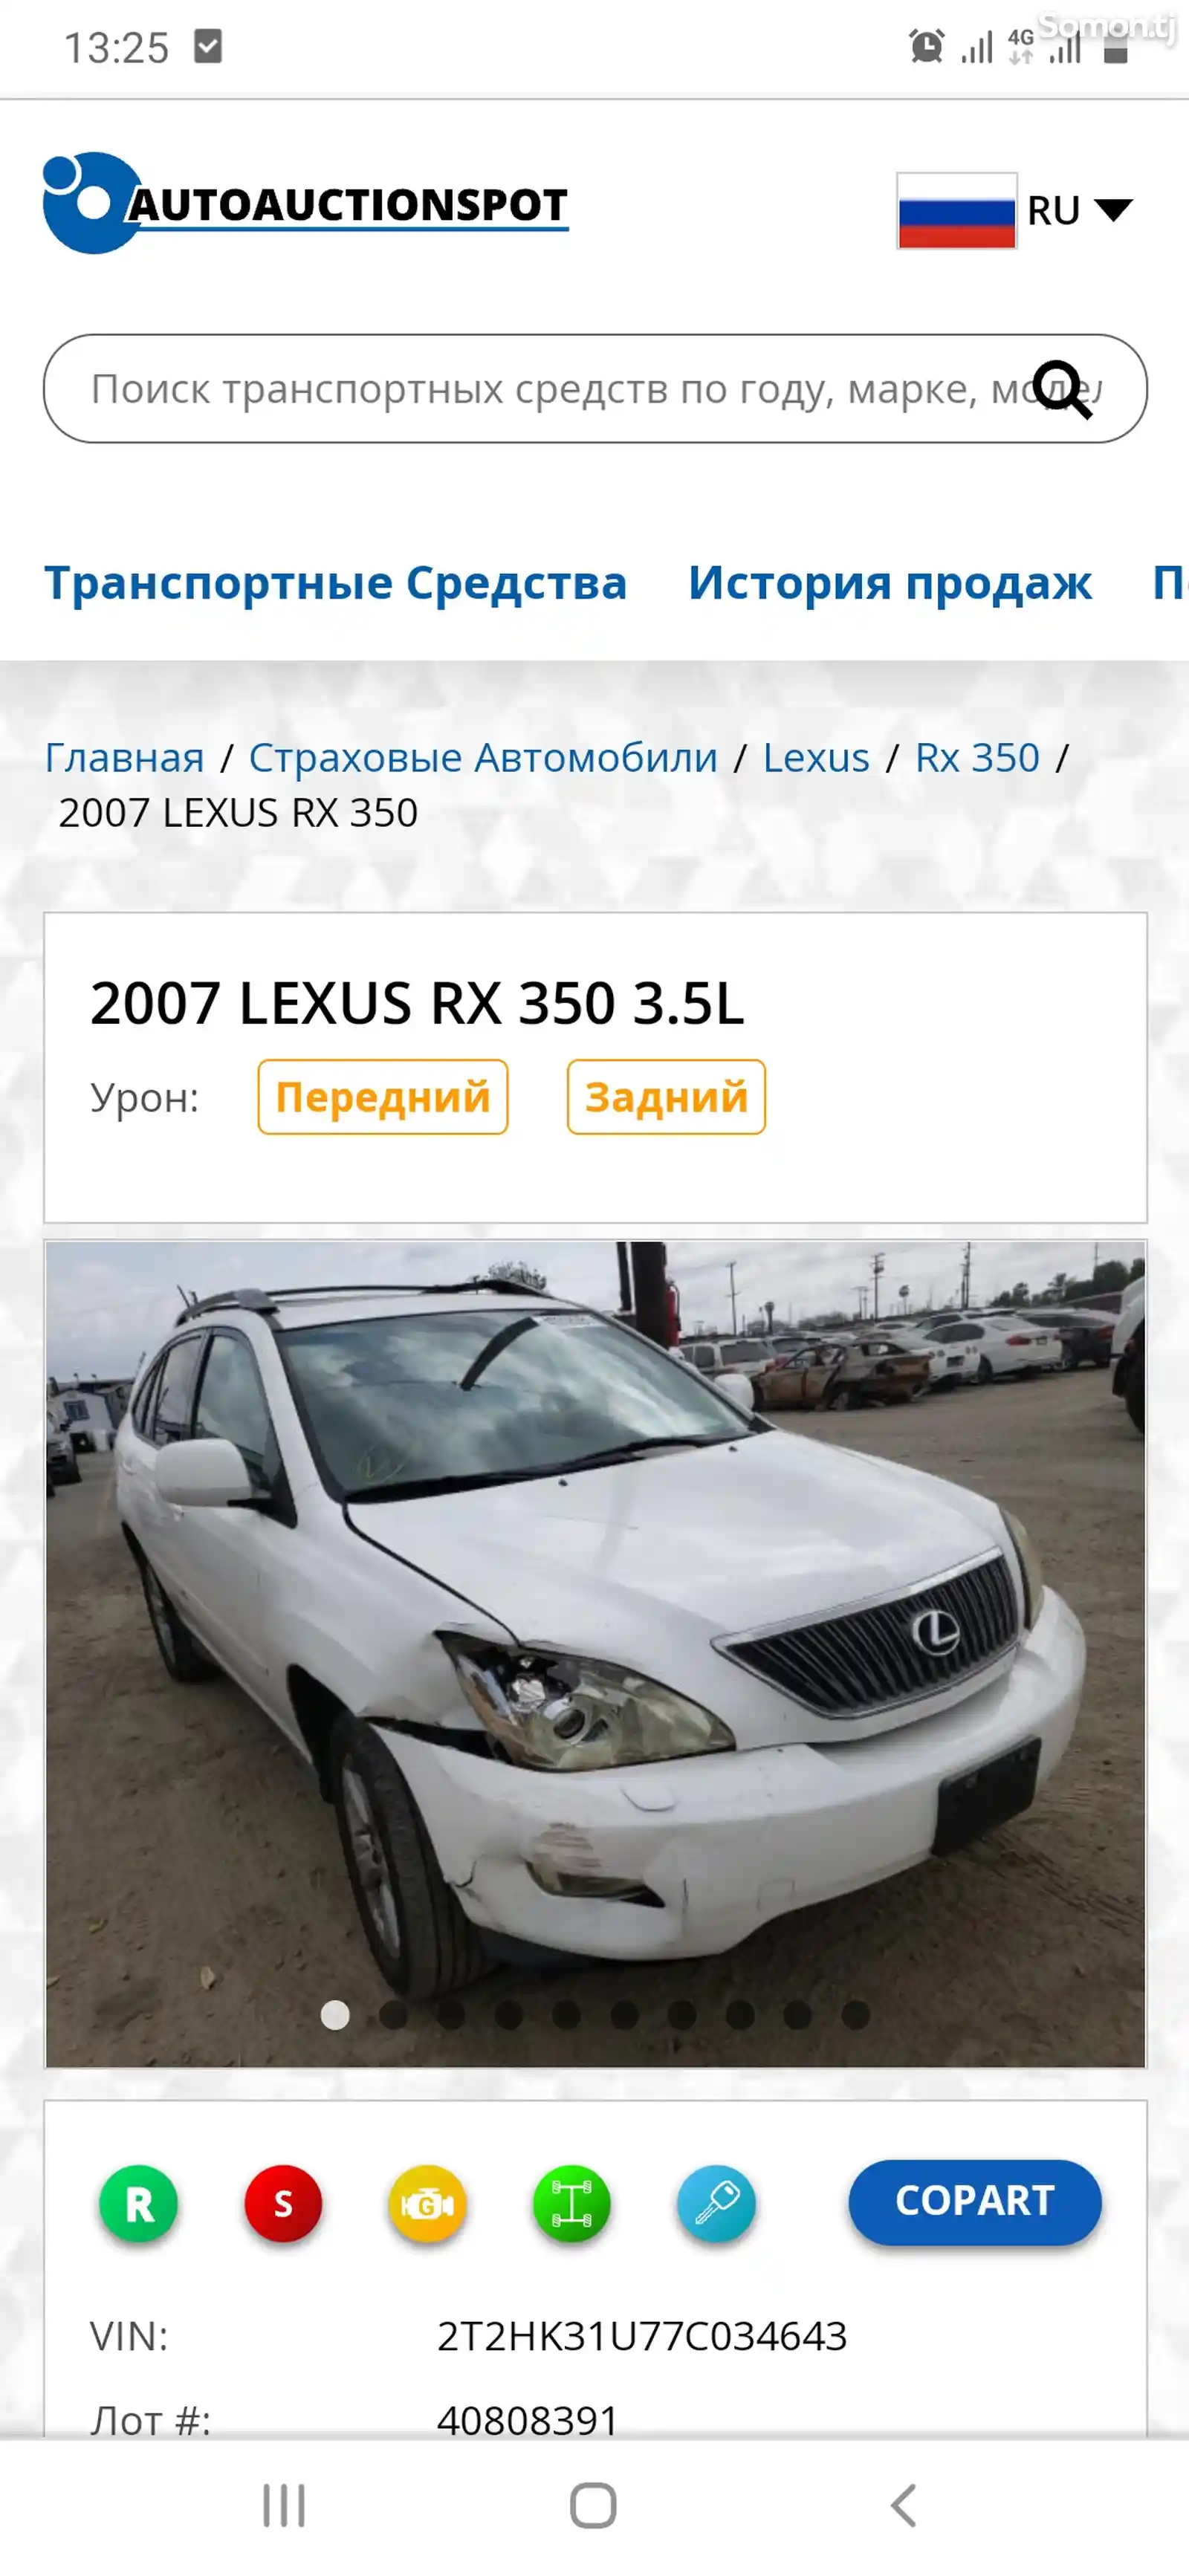 Lexus RX series, 2007-10